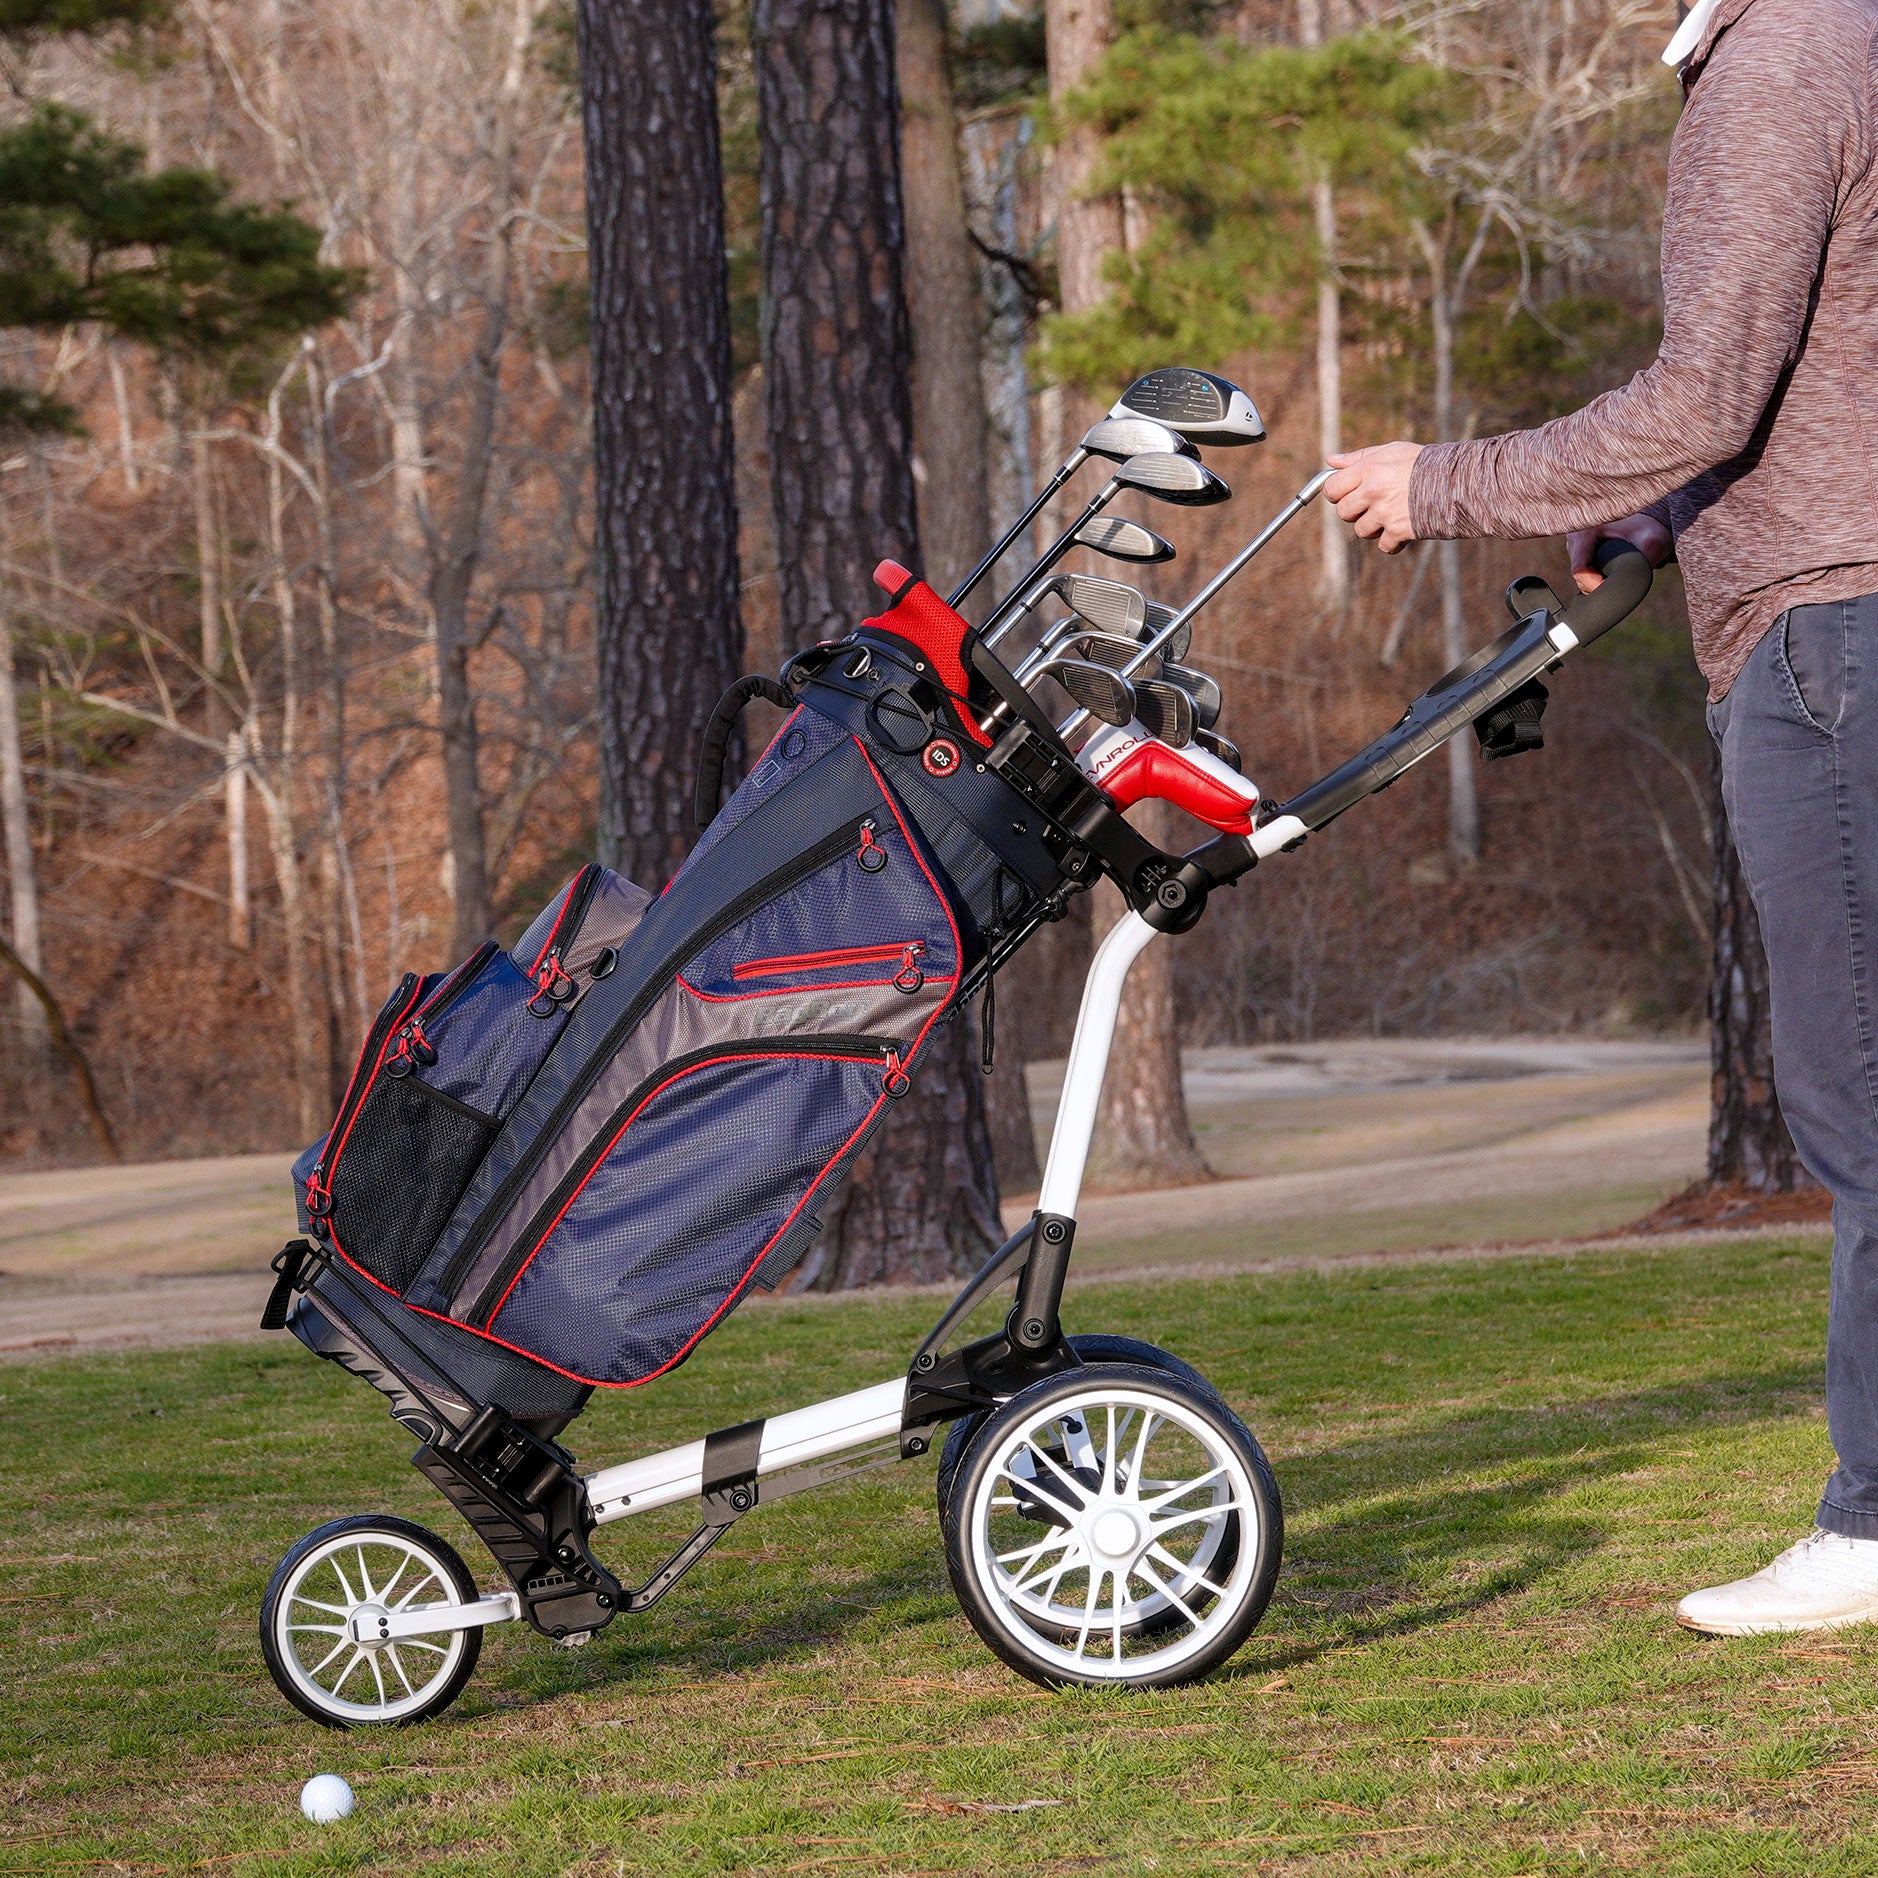 Golf Bags & Push Carts